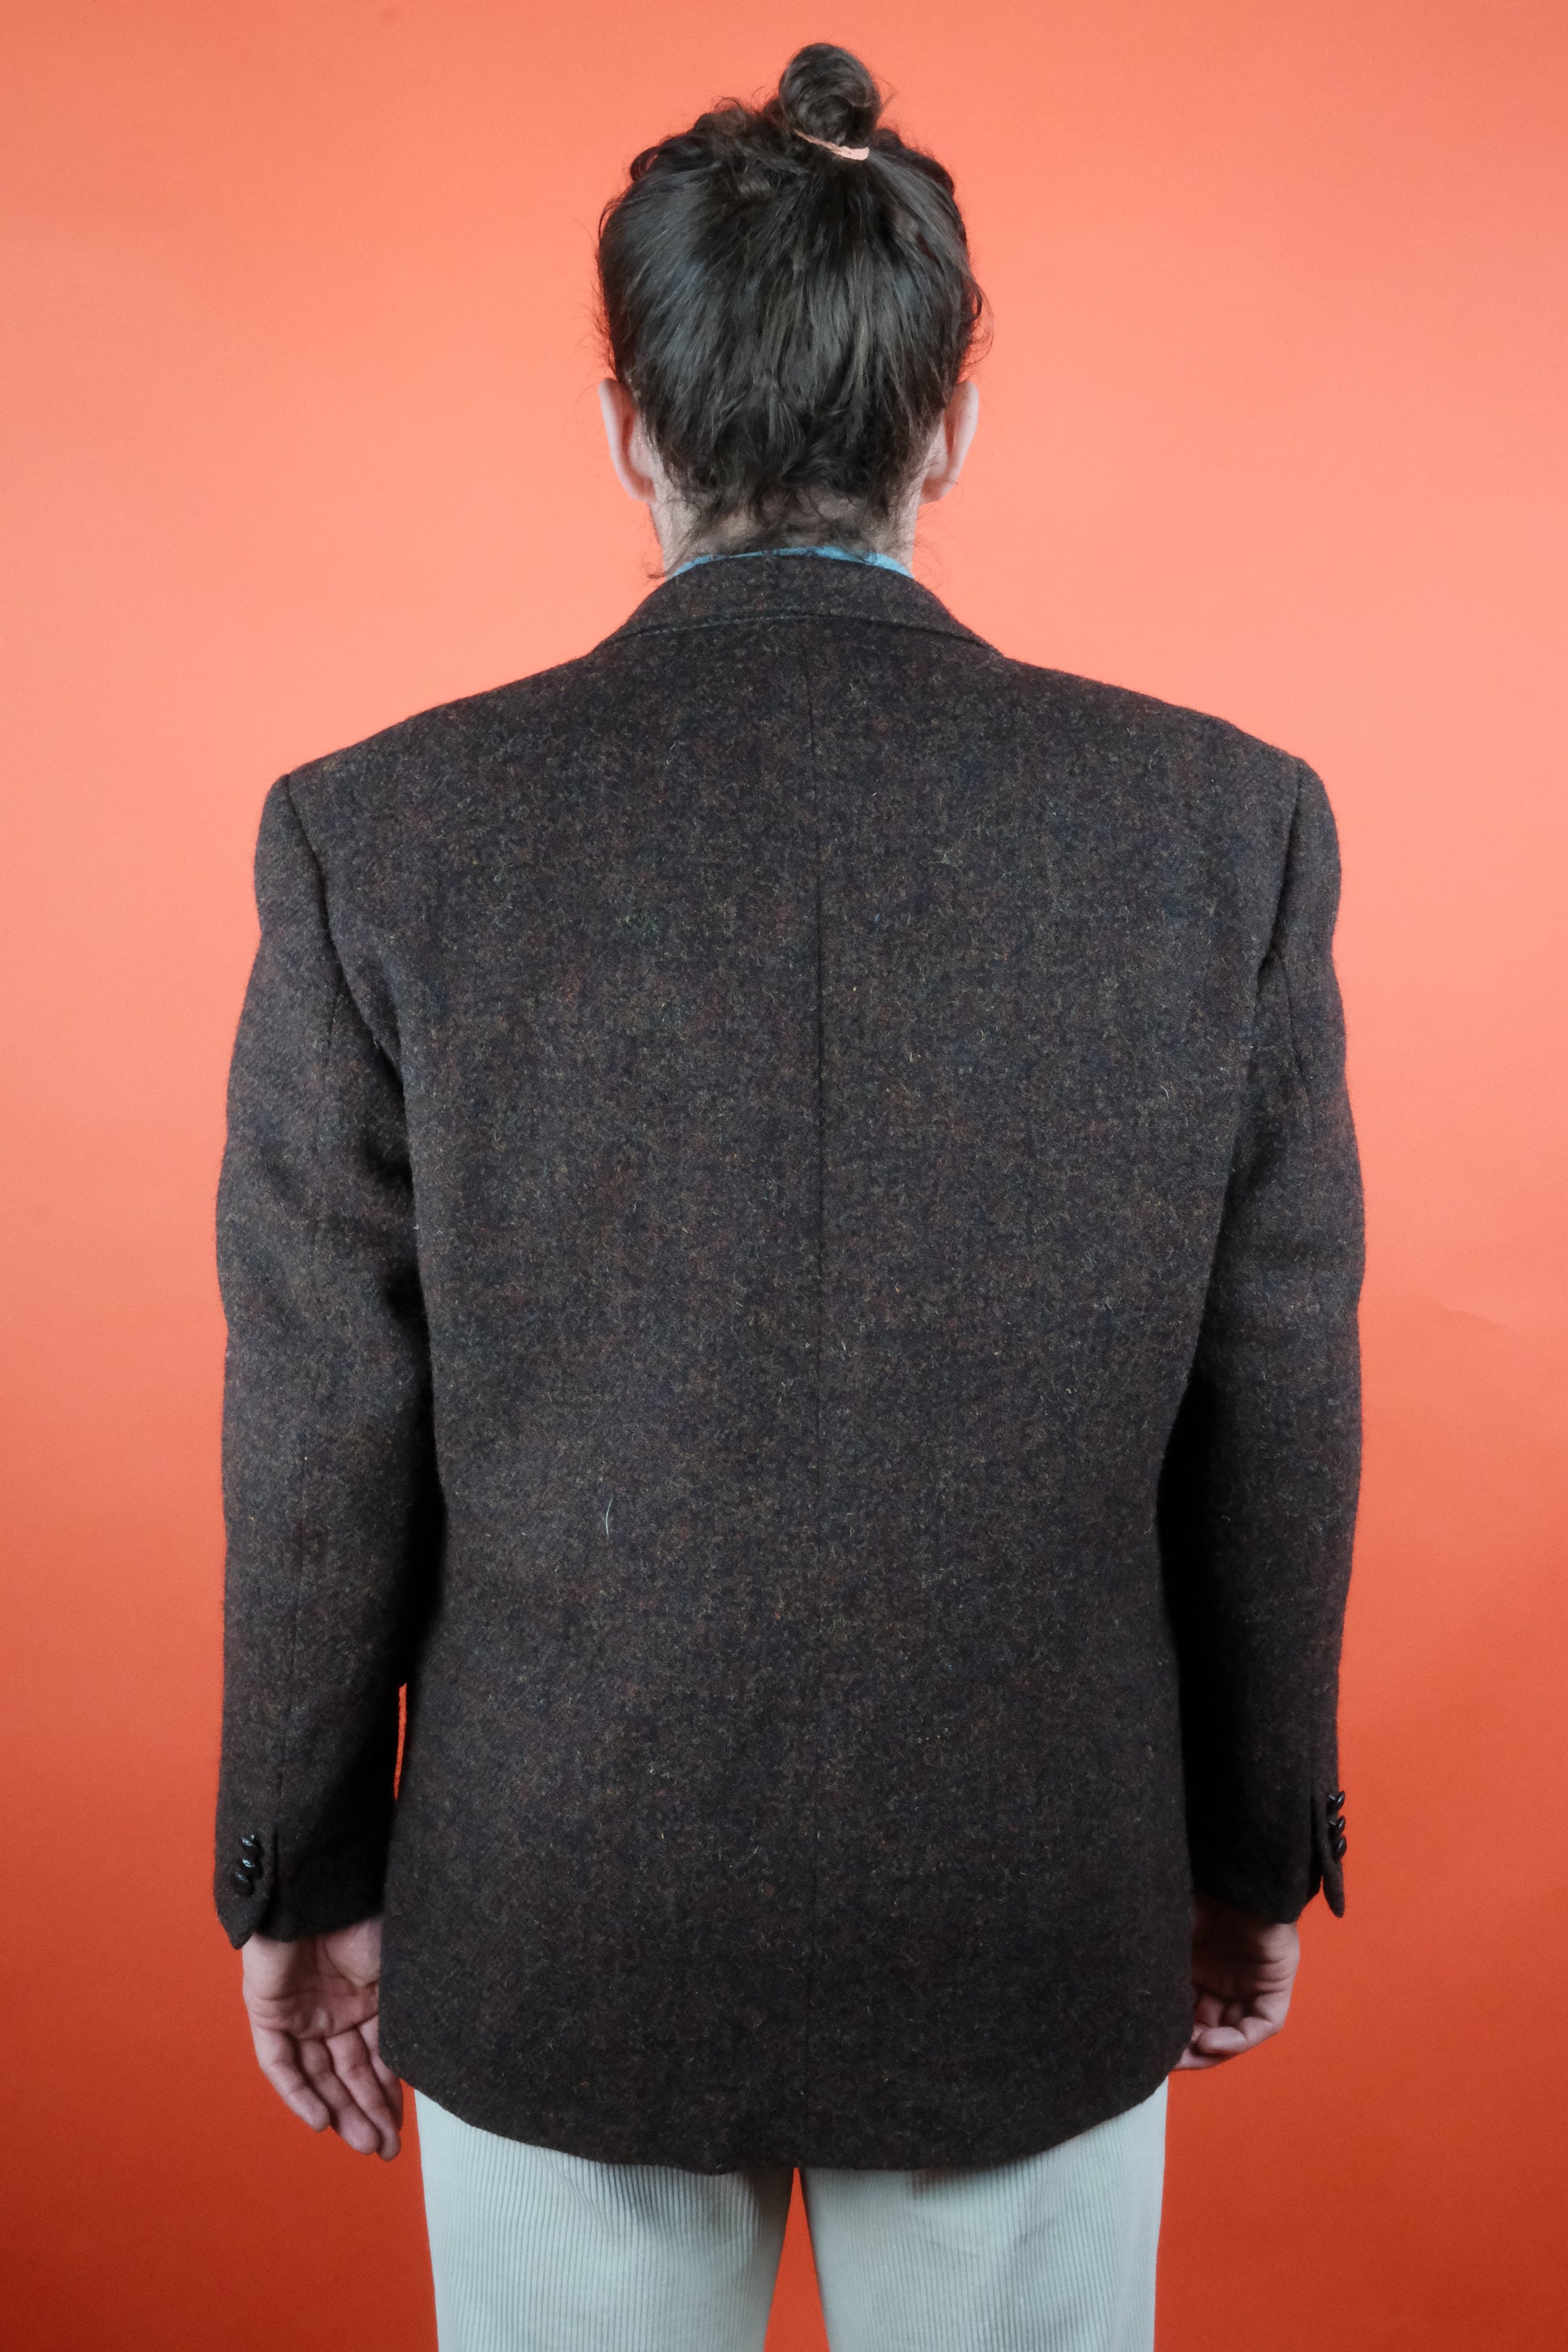 Harris Tweed  Jacket - vintage clothing clochard92.com